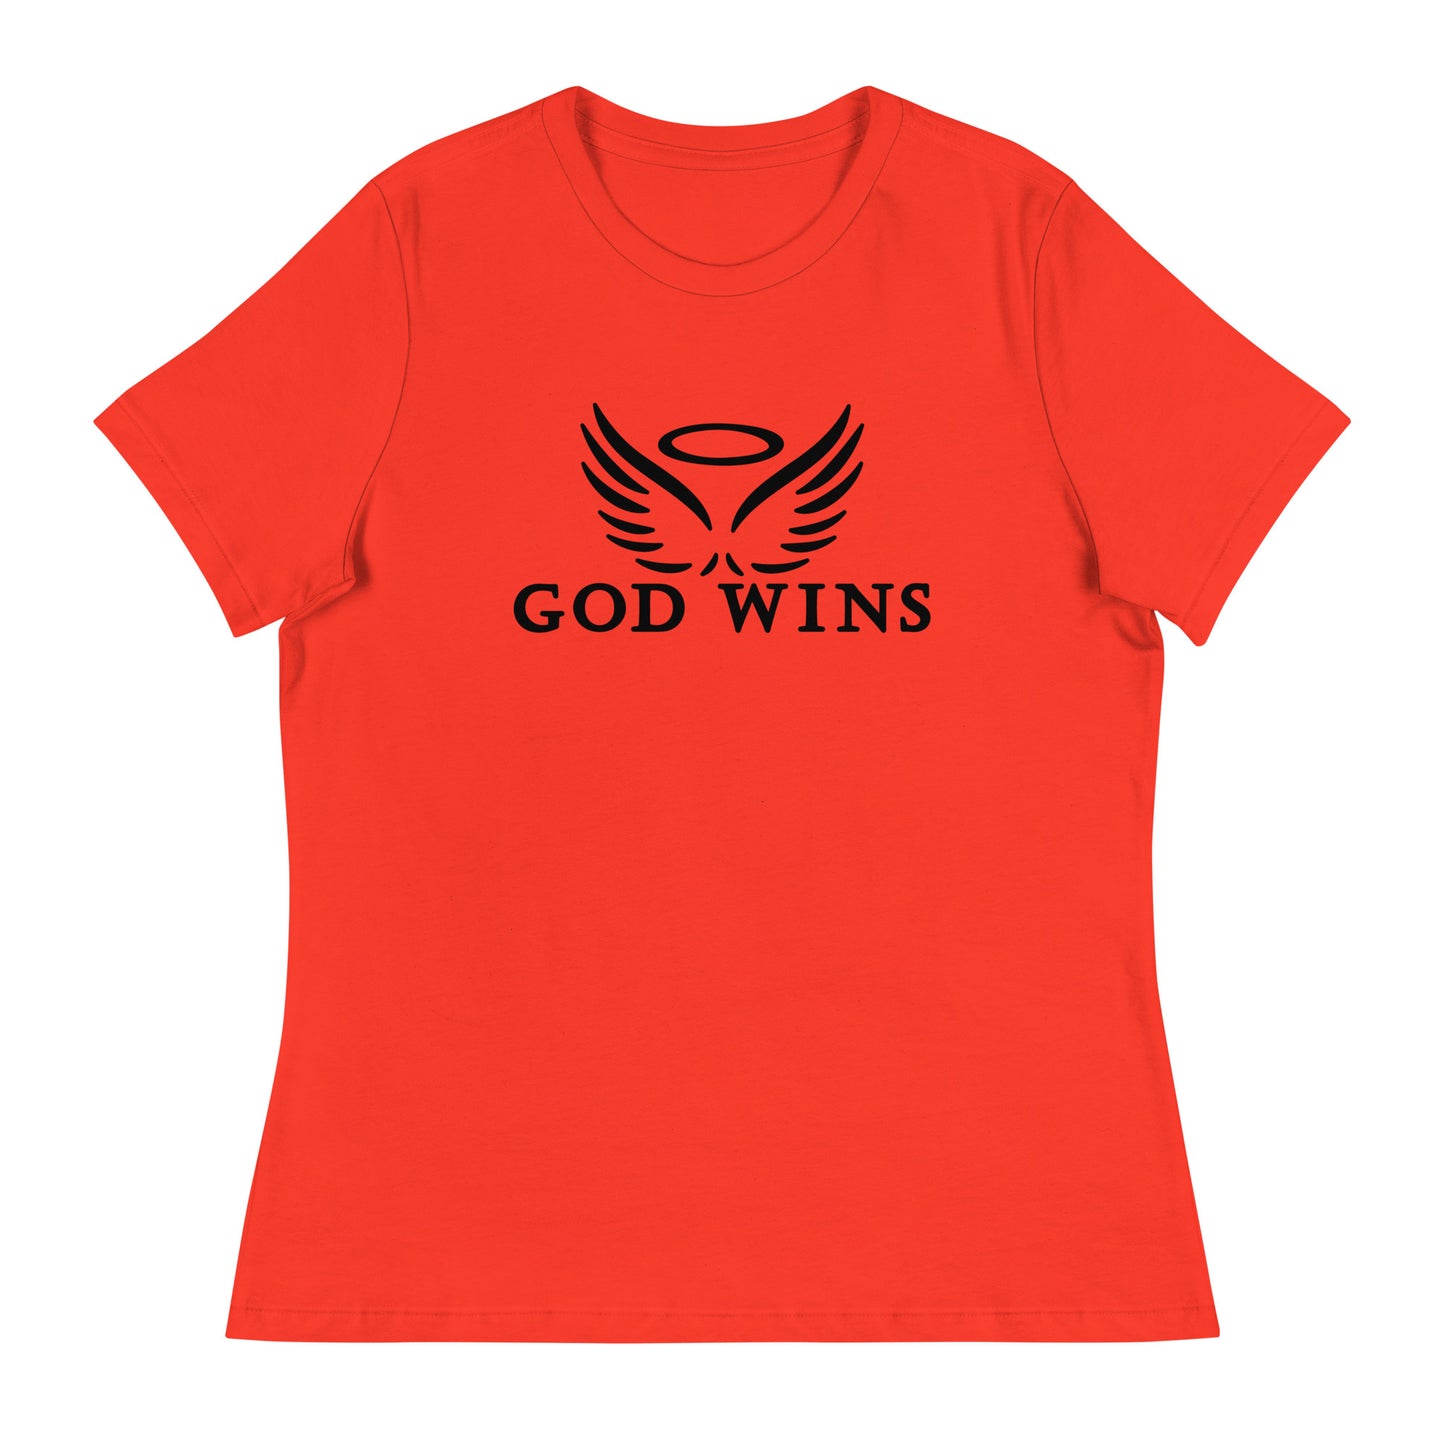 God Wins women's tee